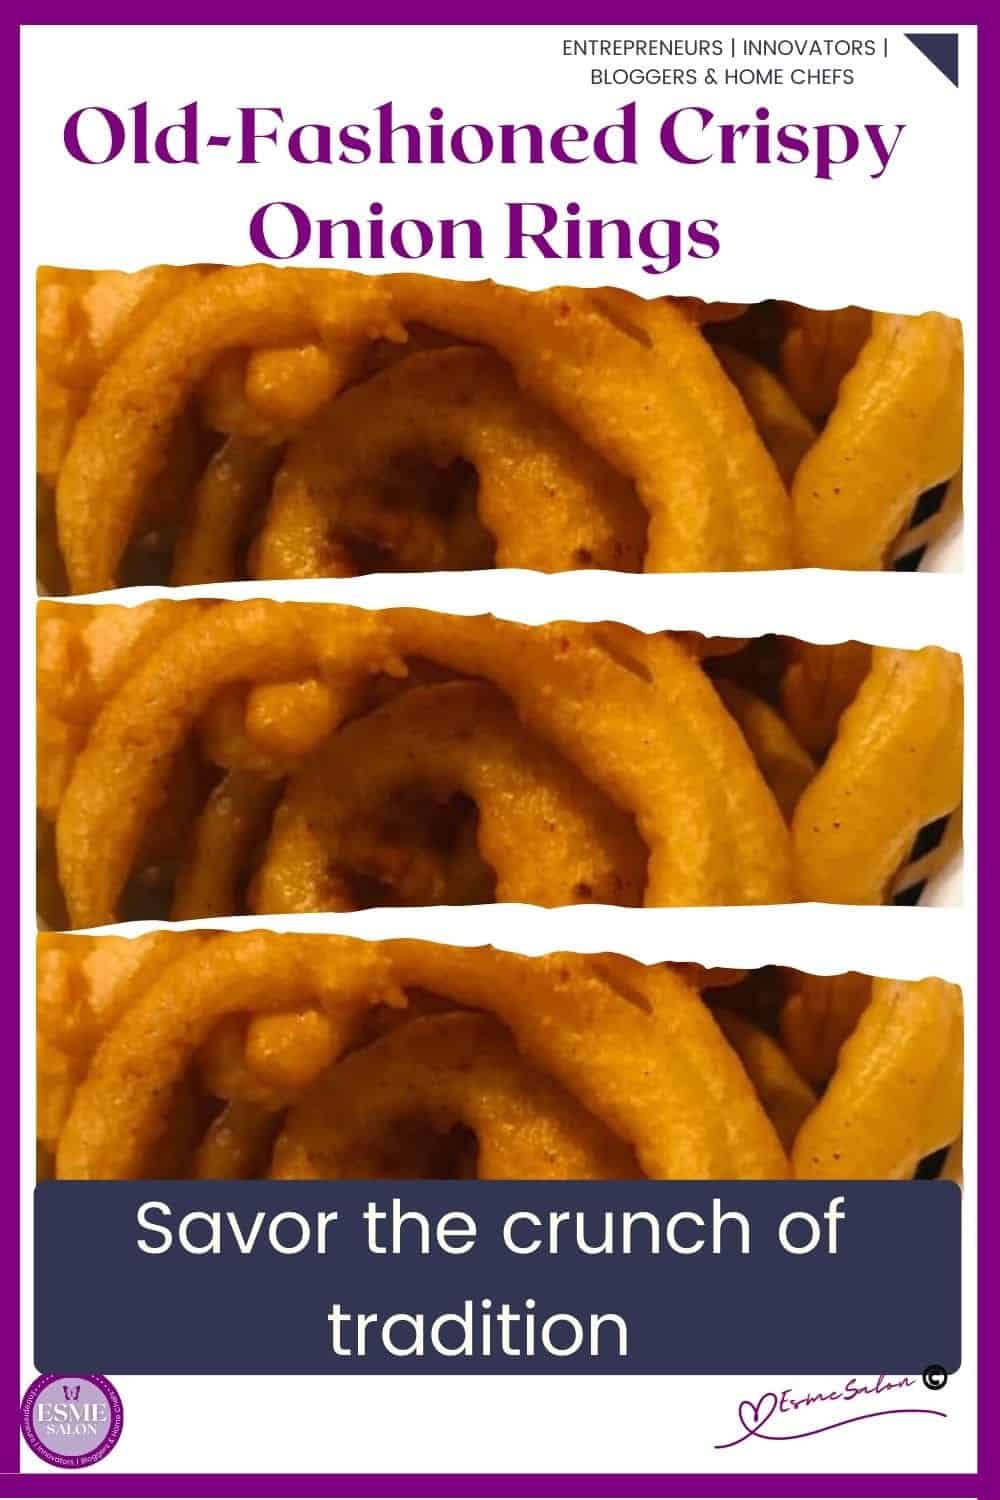 an image of crispy onion rings